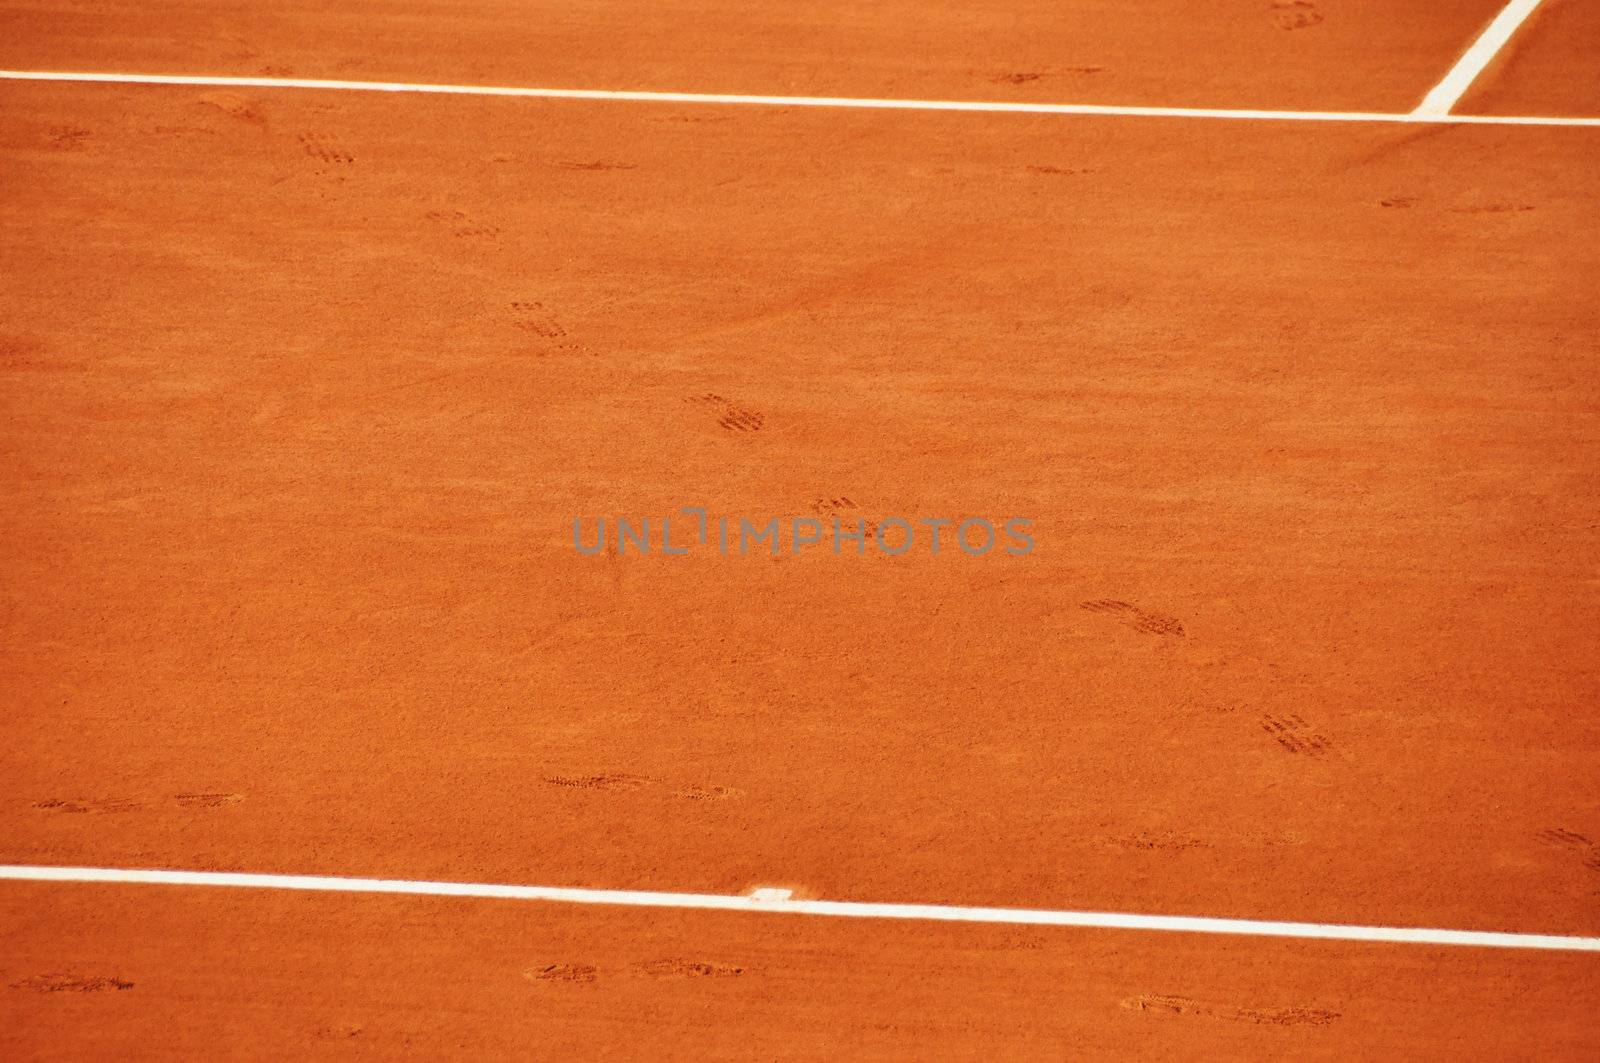 Clay tennis court, Roland Garros, Paris, France